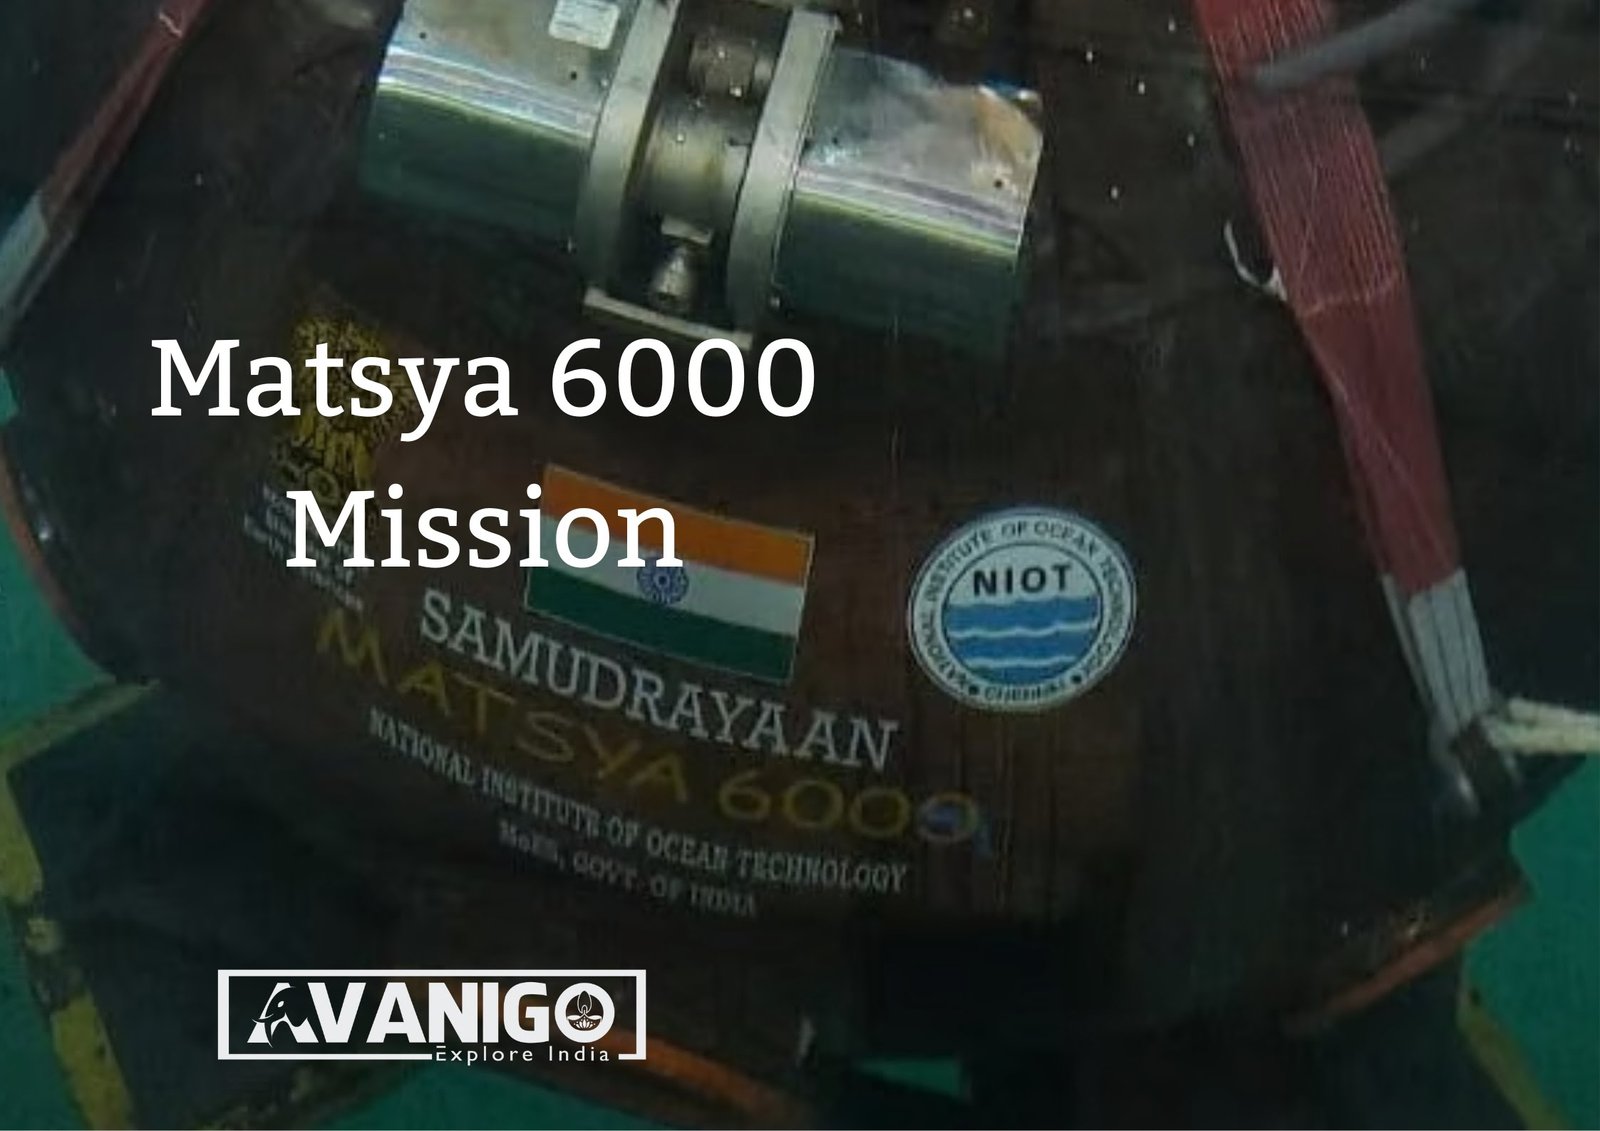 Matsya 6000